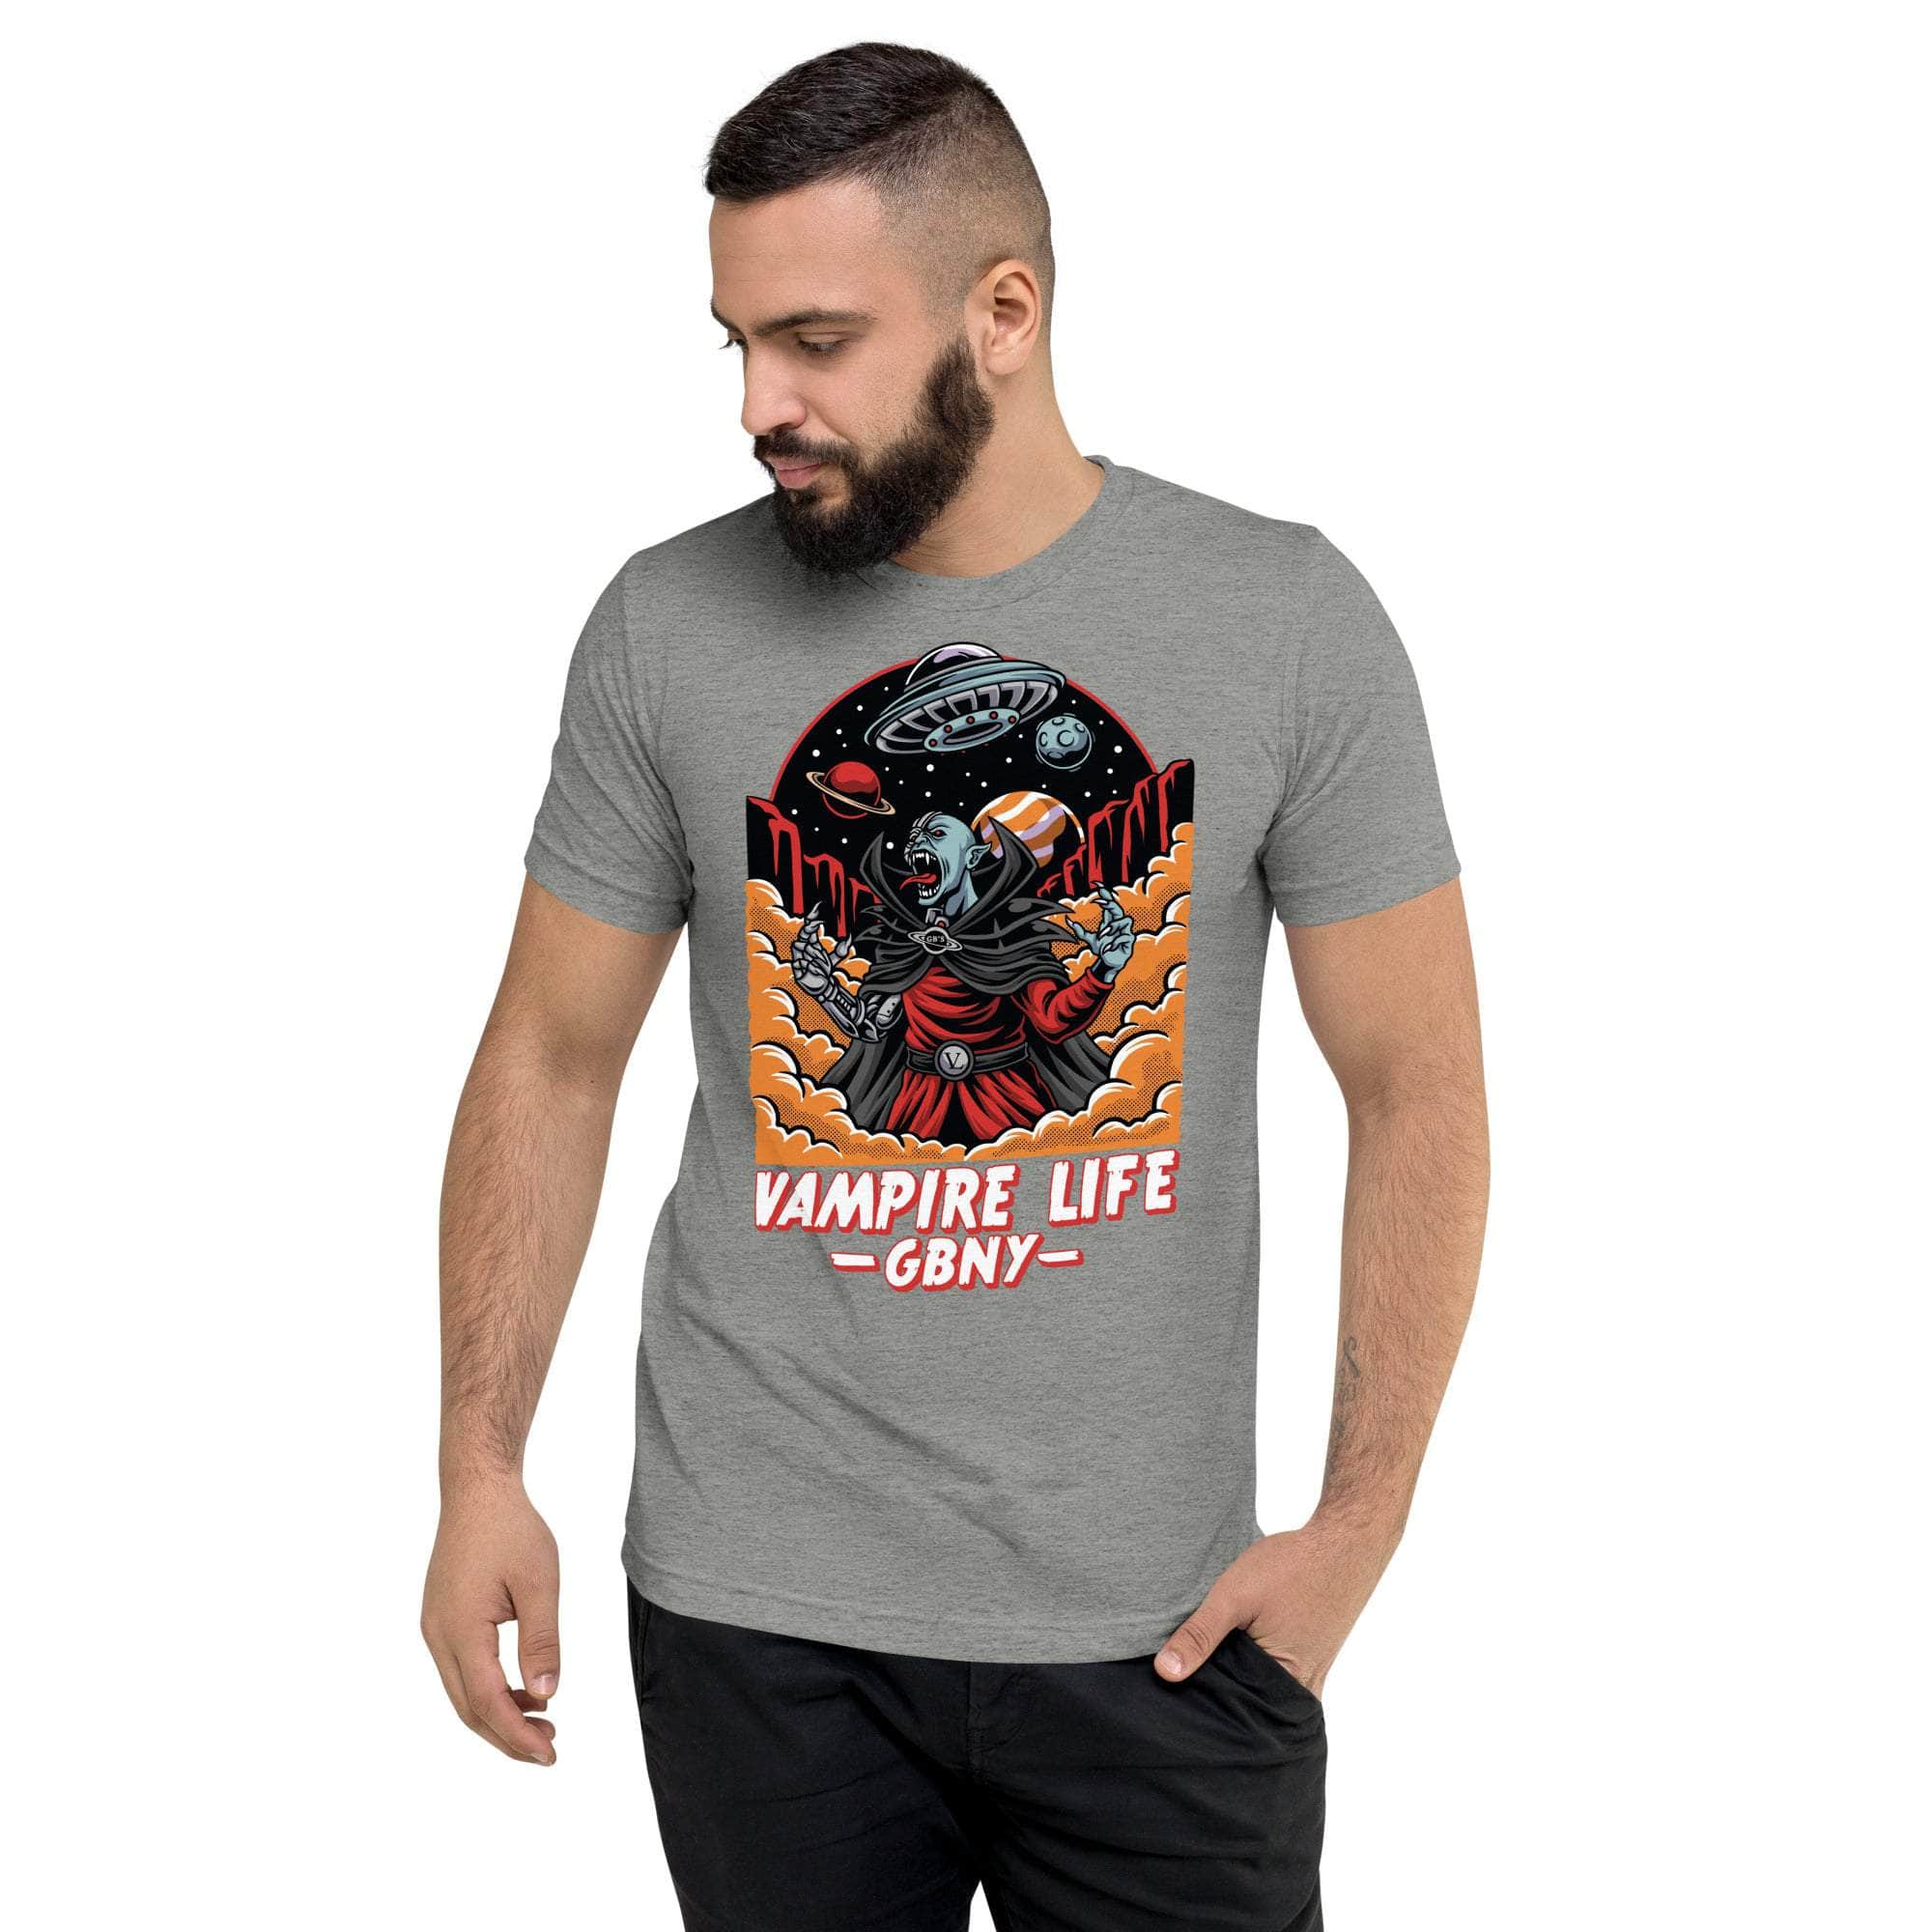 GBNY Athletic Grey Triblend / XS Vamp Life X GBNY "Space Vampire" T-shirt - Men's 3872353_6472